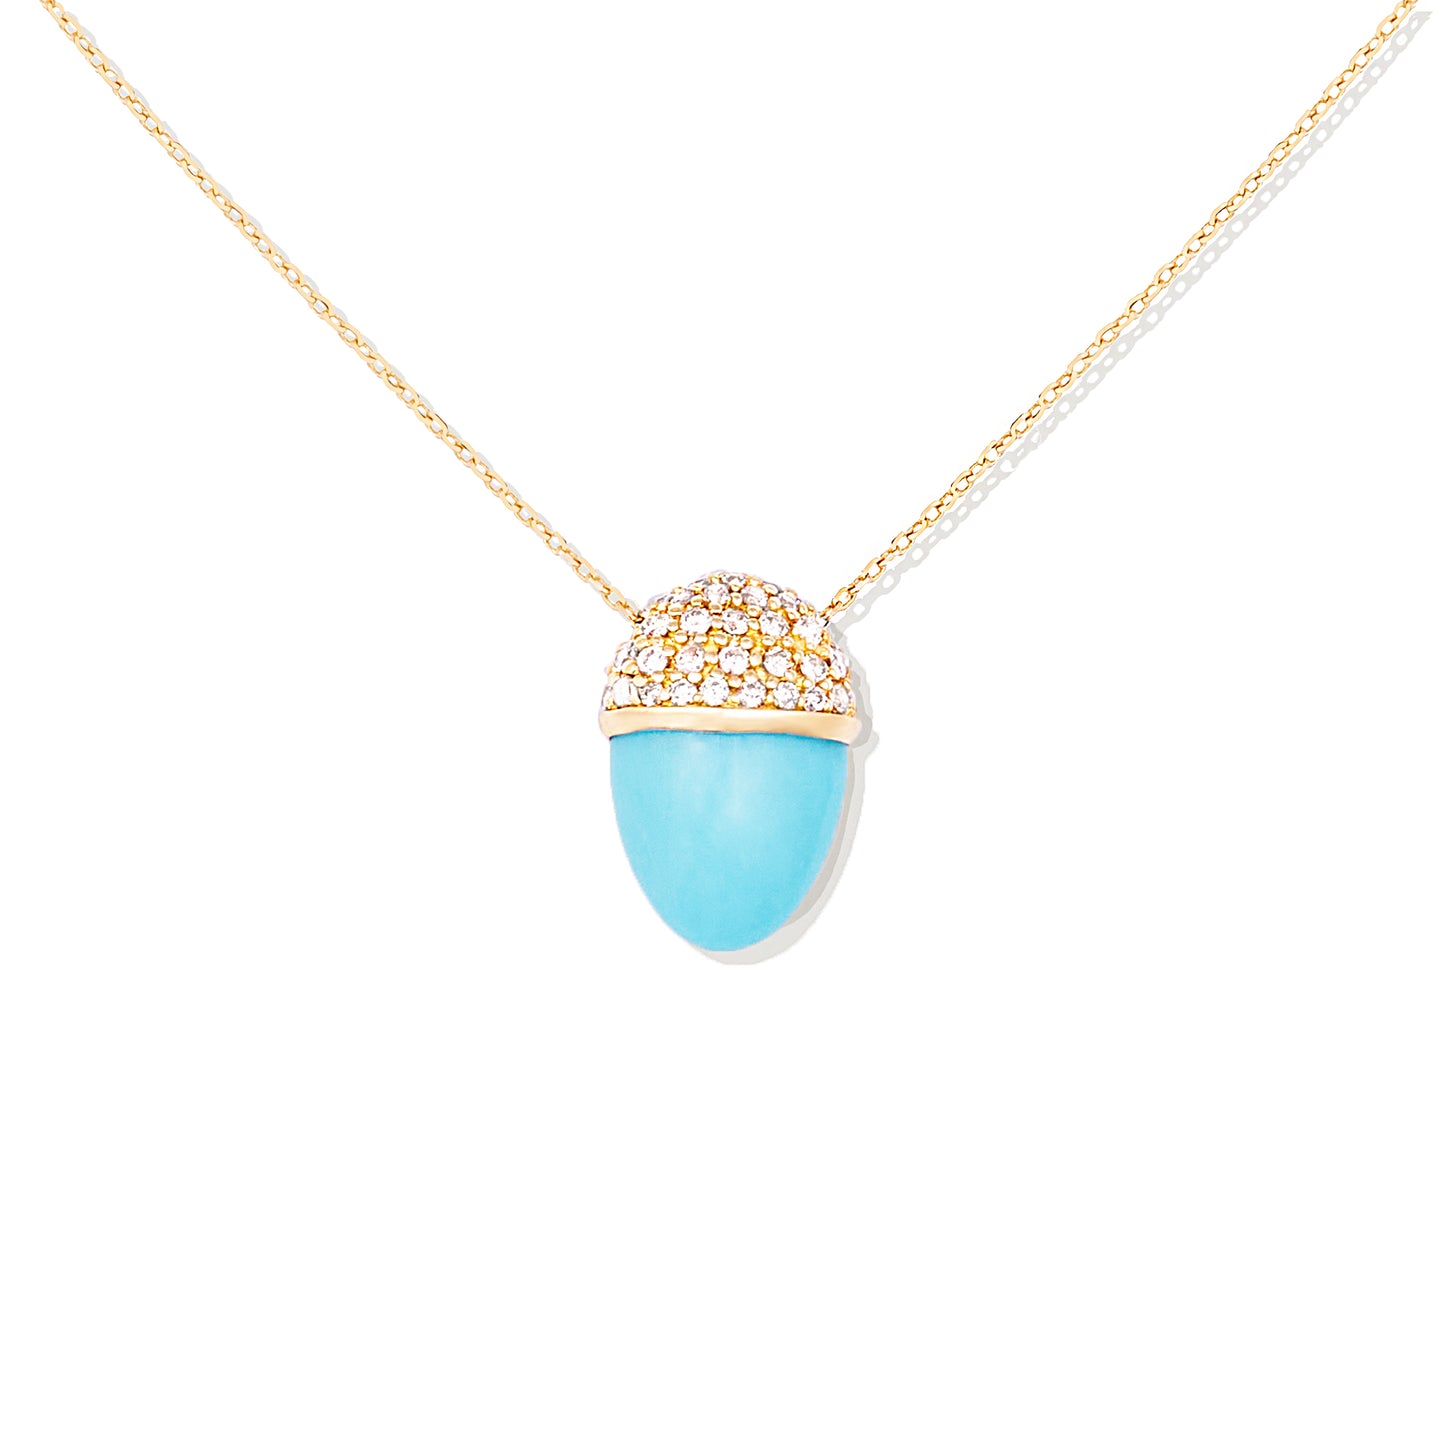 Found Cap Pendant Necklace - Turquoise & Brown Diamond